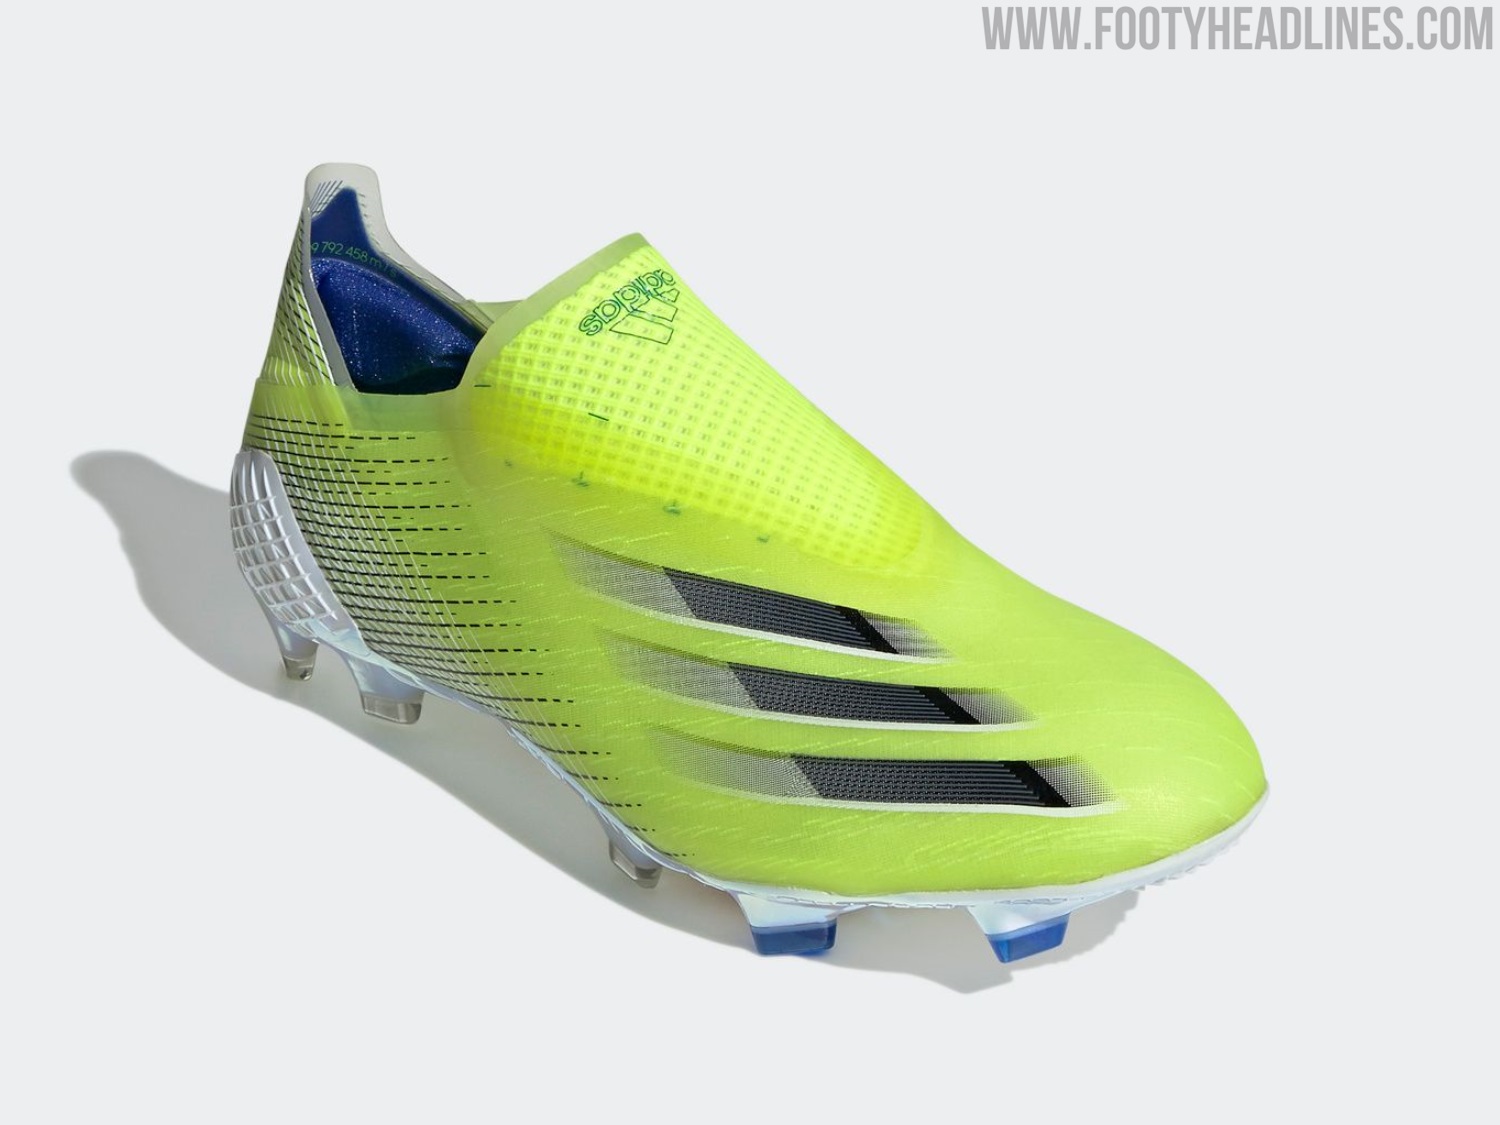 Adidas 'Superlative' 2021 Boots Pack Released - Next-Gen Copa & Predator -  Footy Headlines